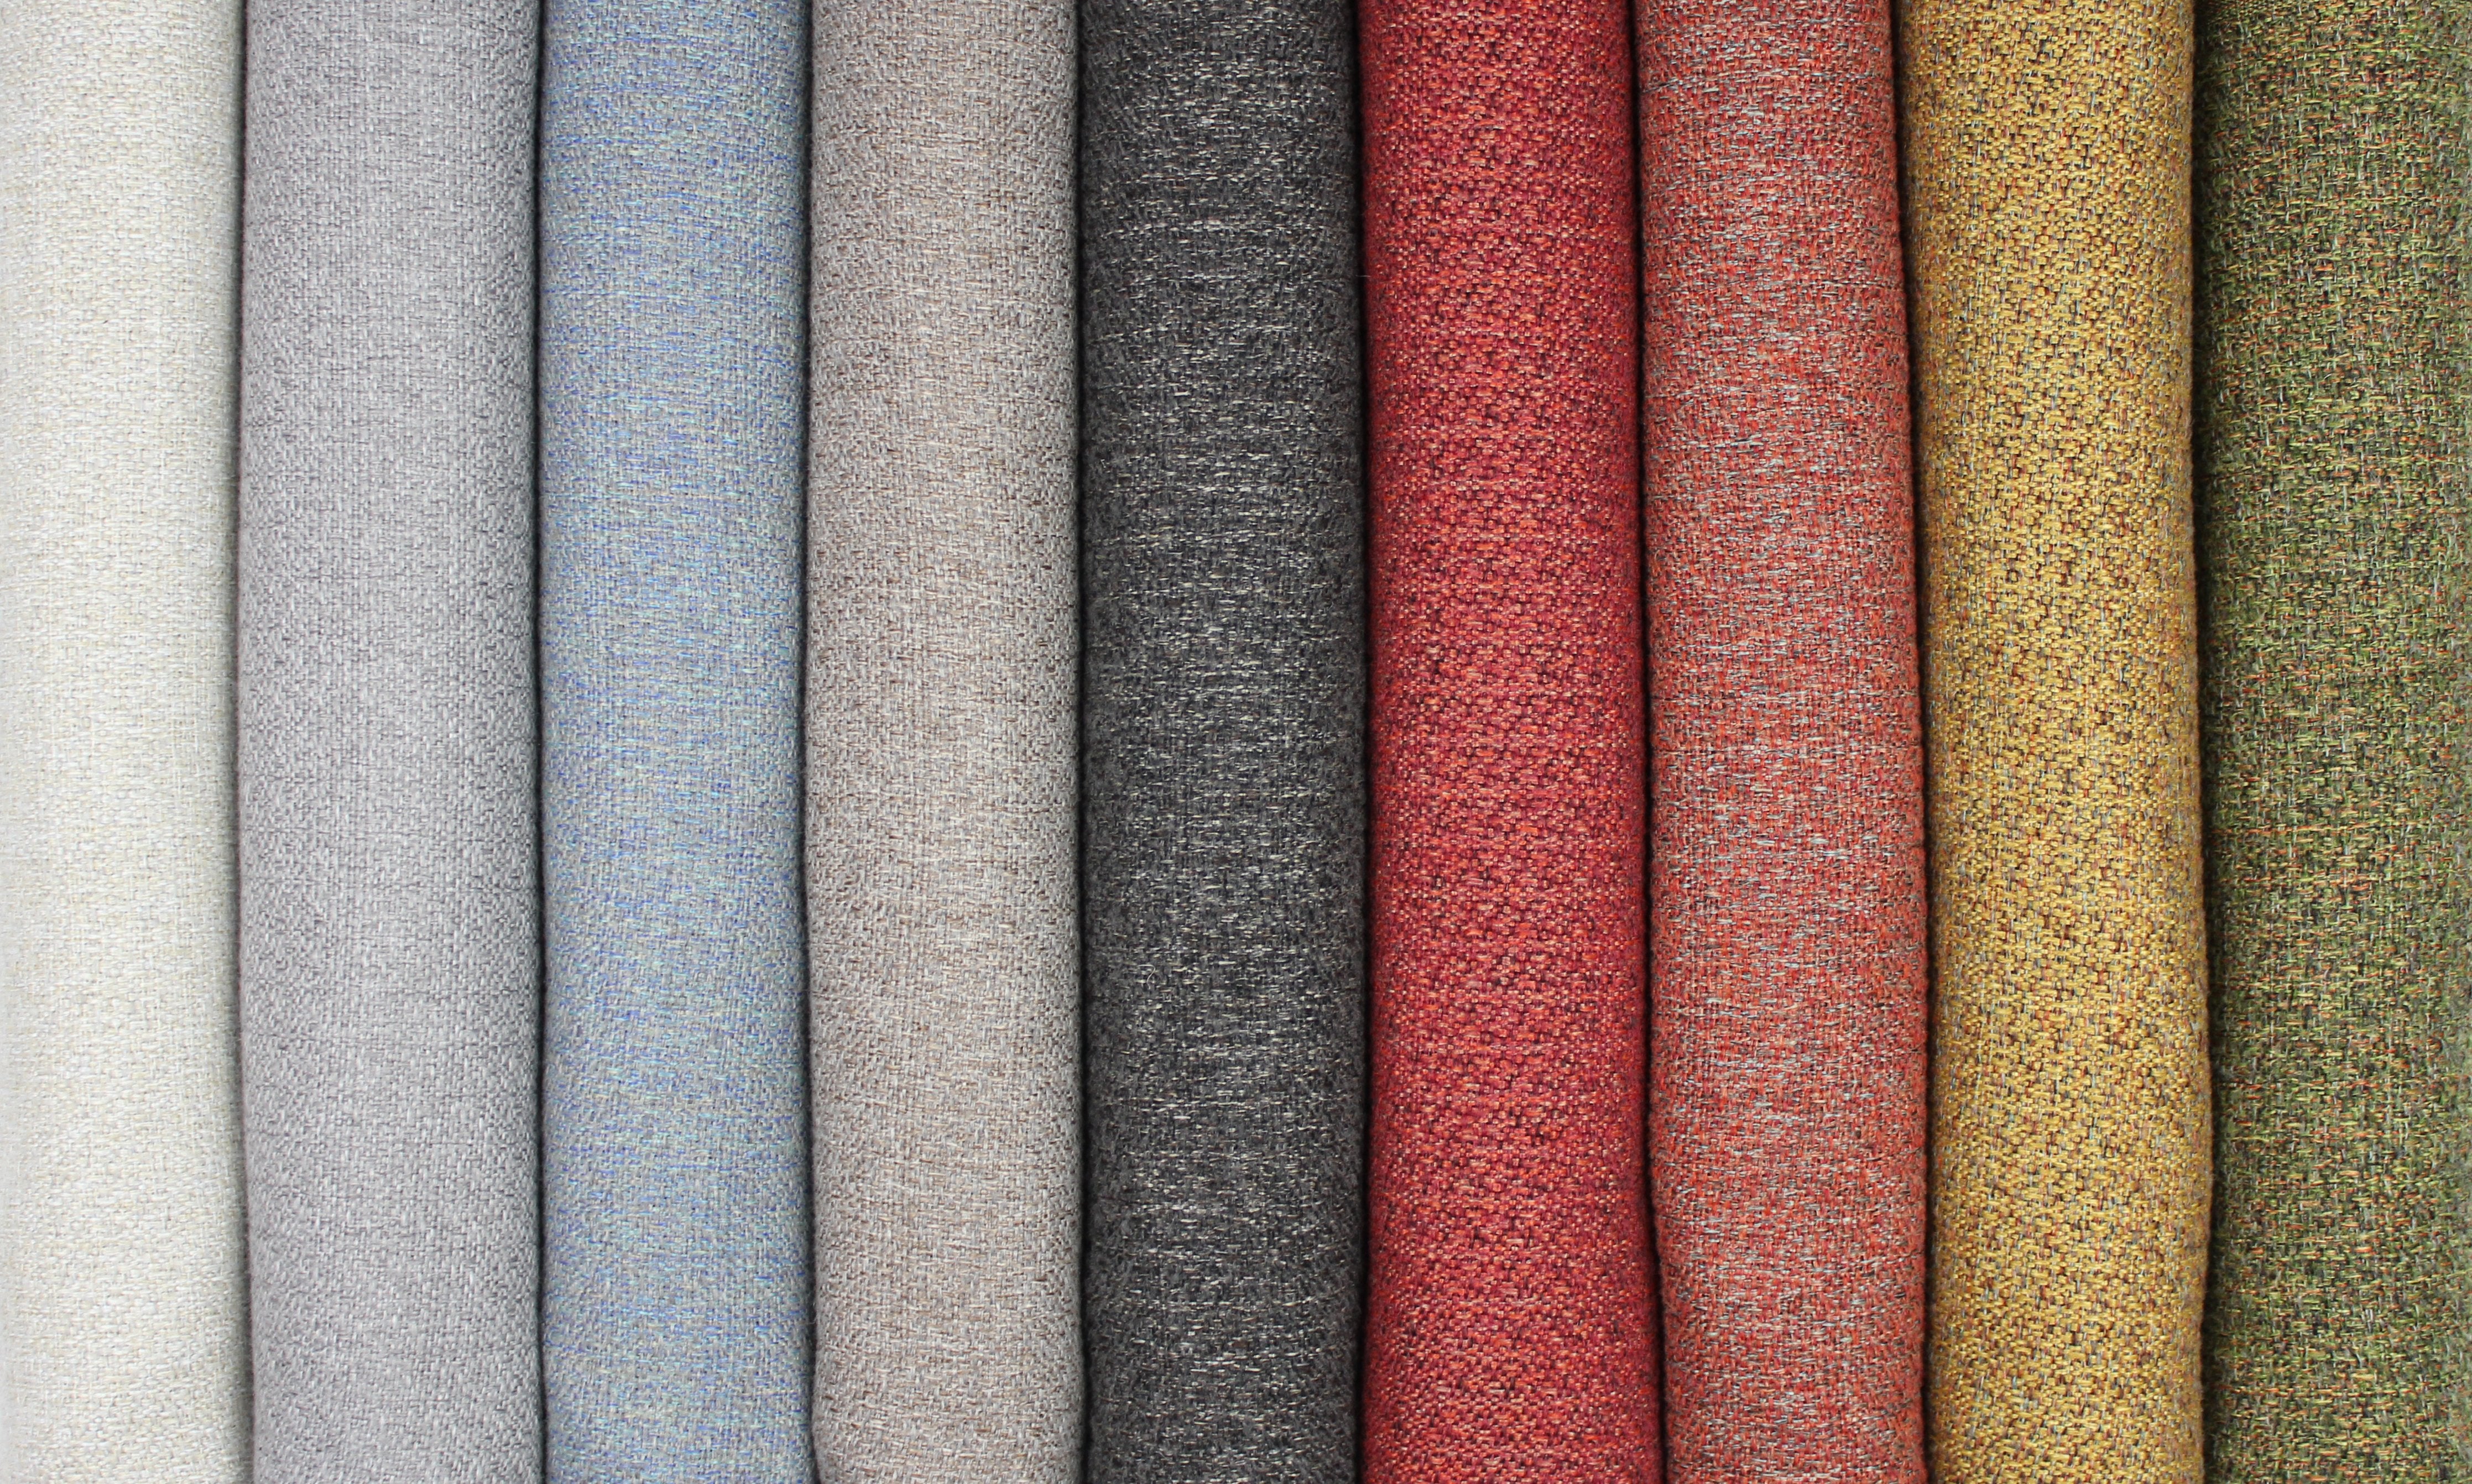 McAlister Textiles Highlands Rustic Plain Terracotta Fabric Fabrics 